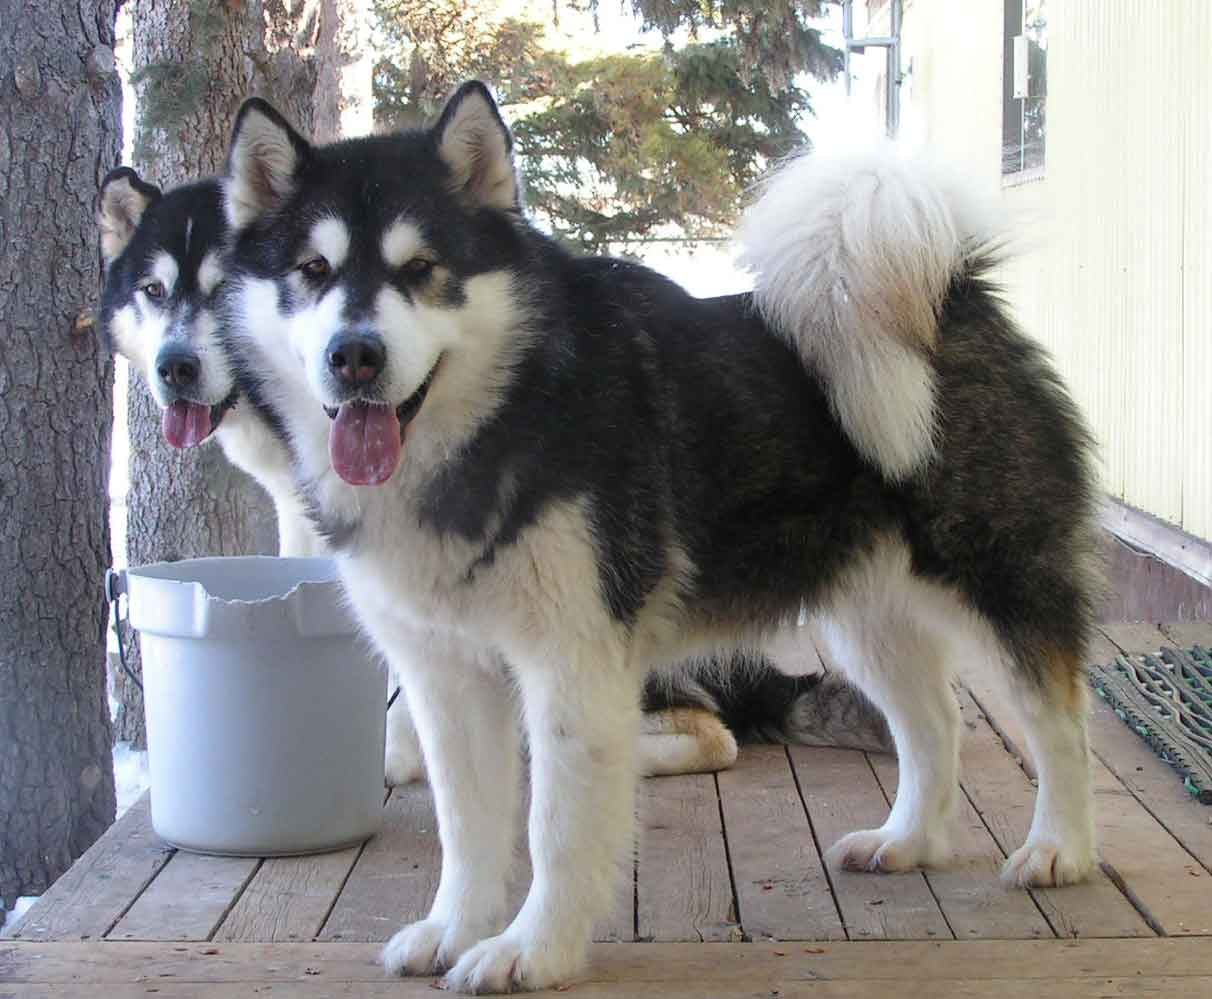 Secondary image of Alaskan Malamute dog breed